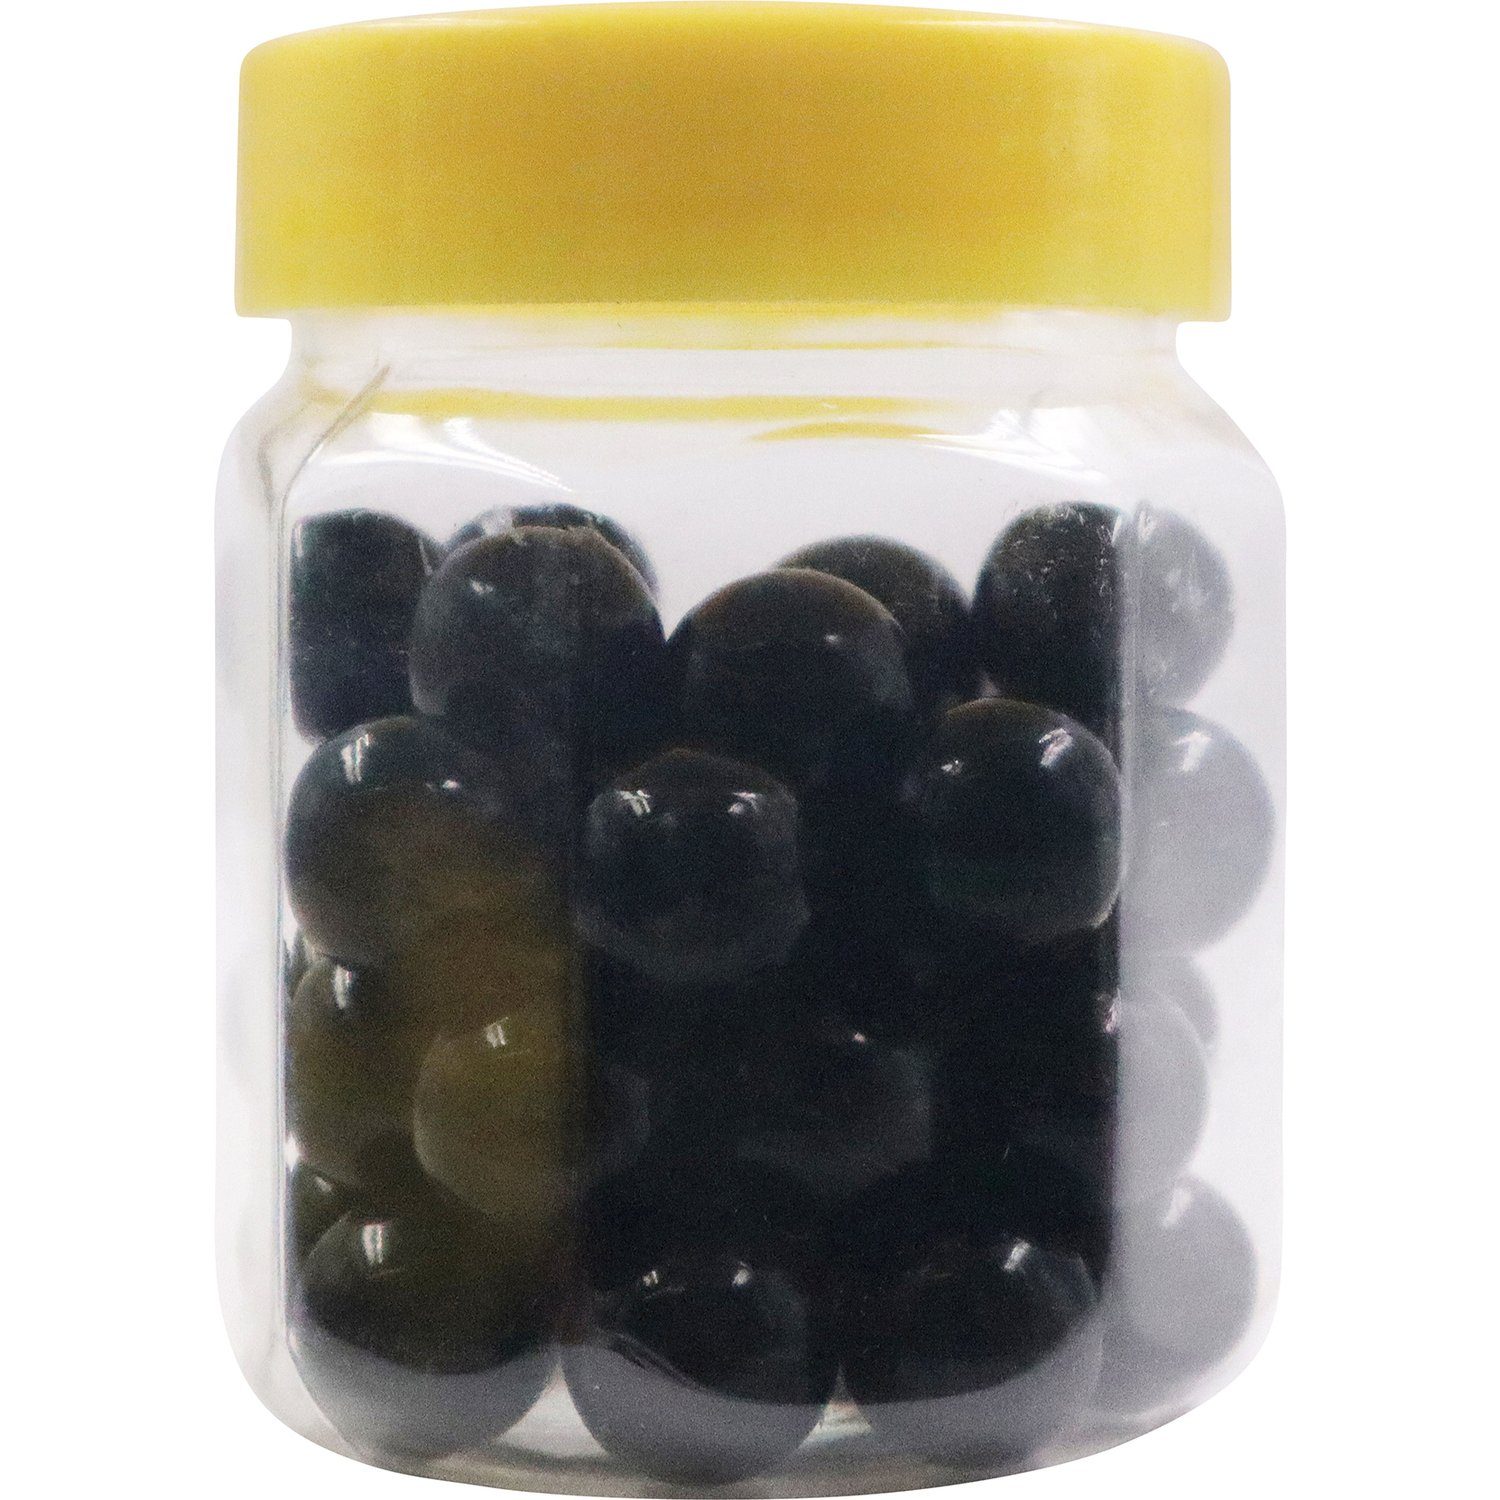 Perlenbild-Baukasten schwarze zu 40 Perlen EDUPLAY Experimentierkasten